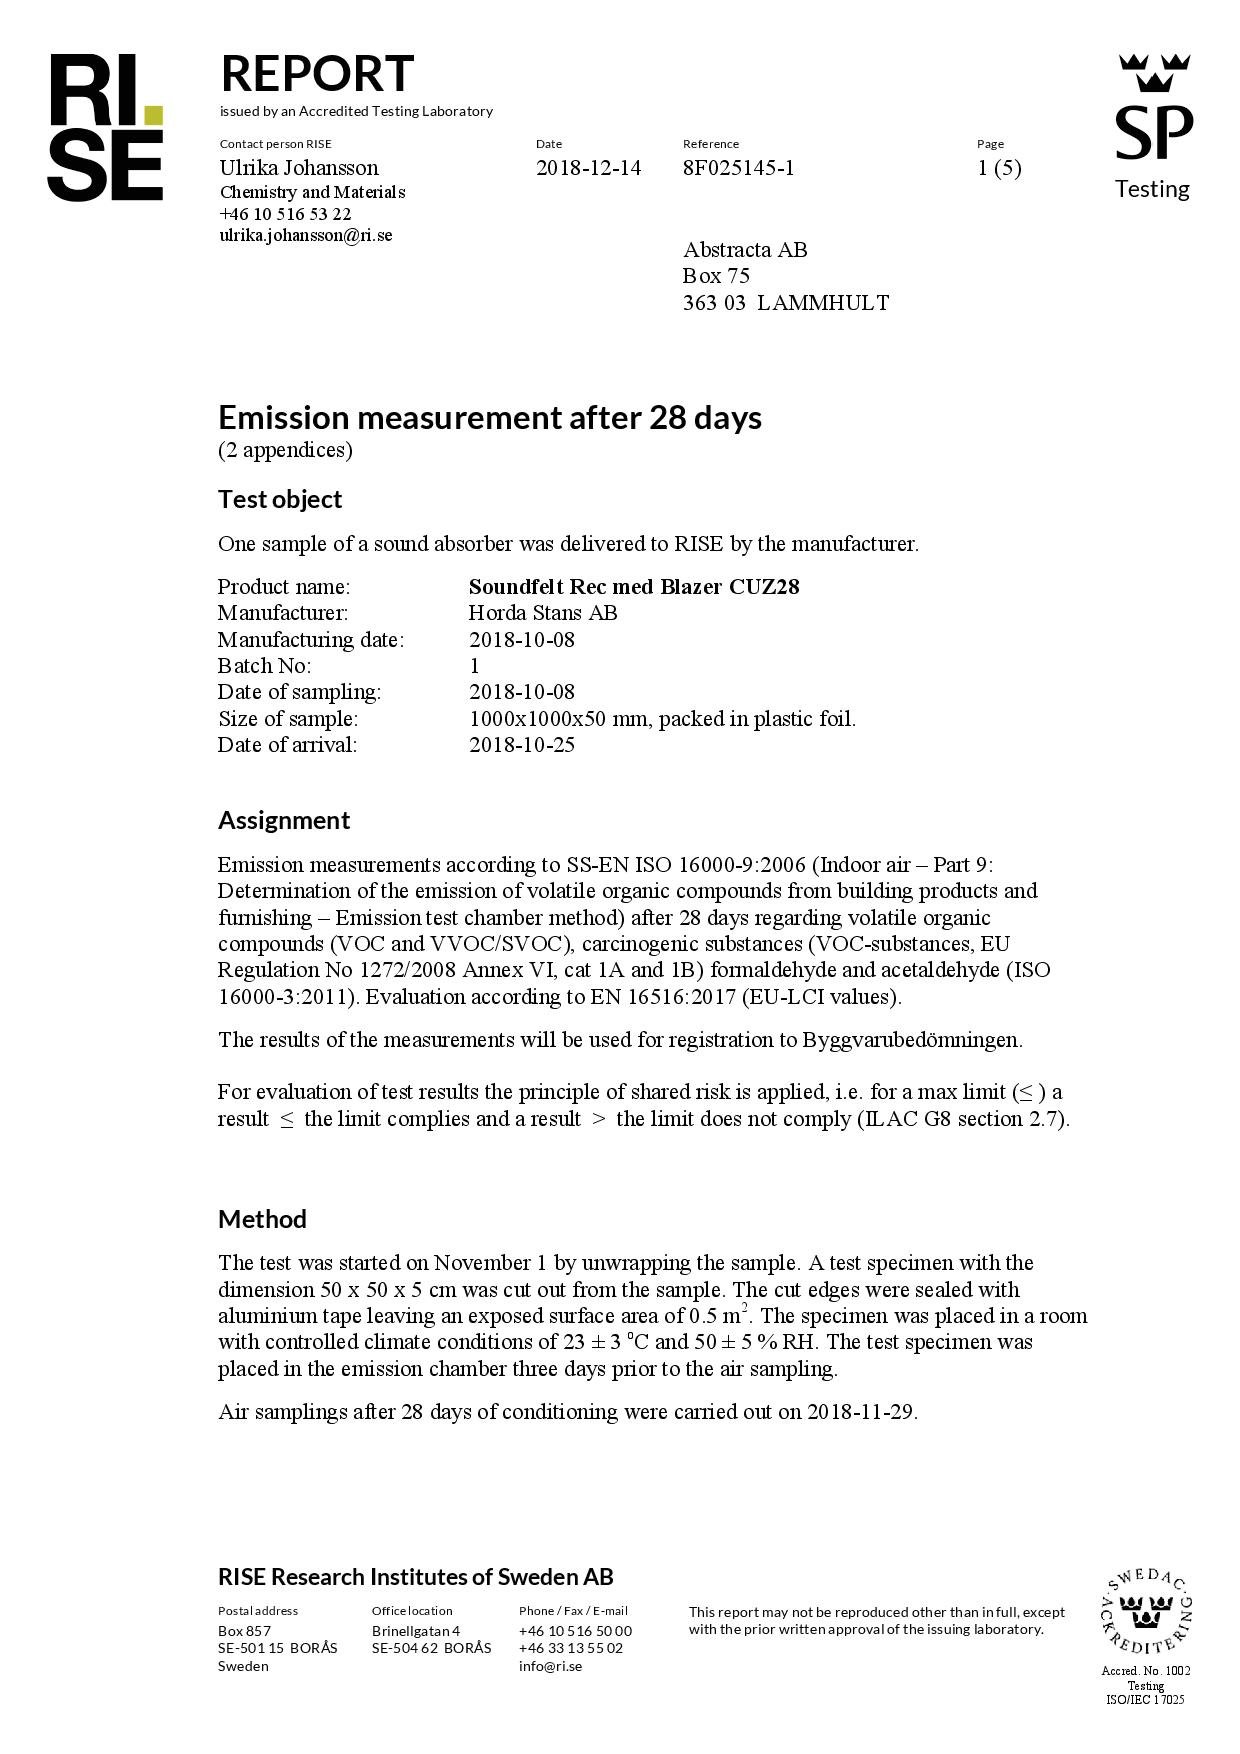 Emission Measurement Soundfelt ISO 16000-9